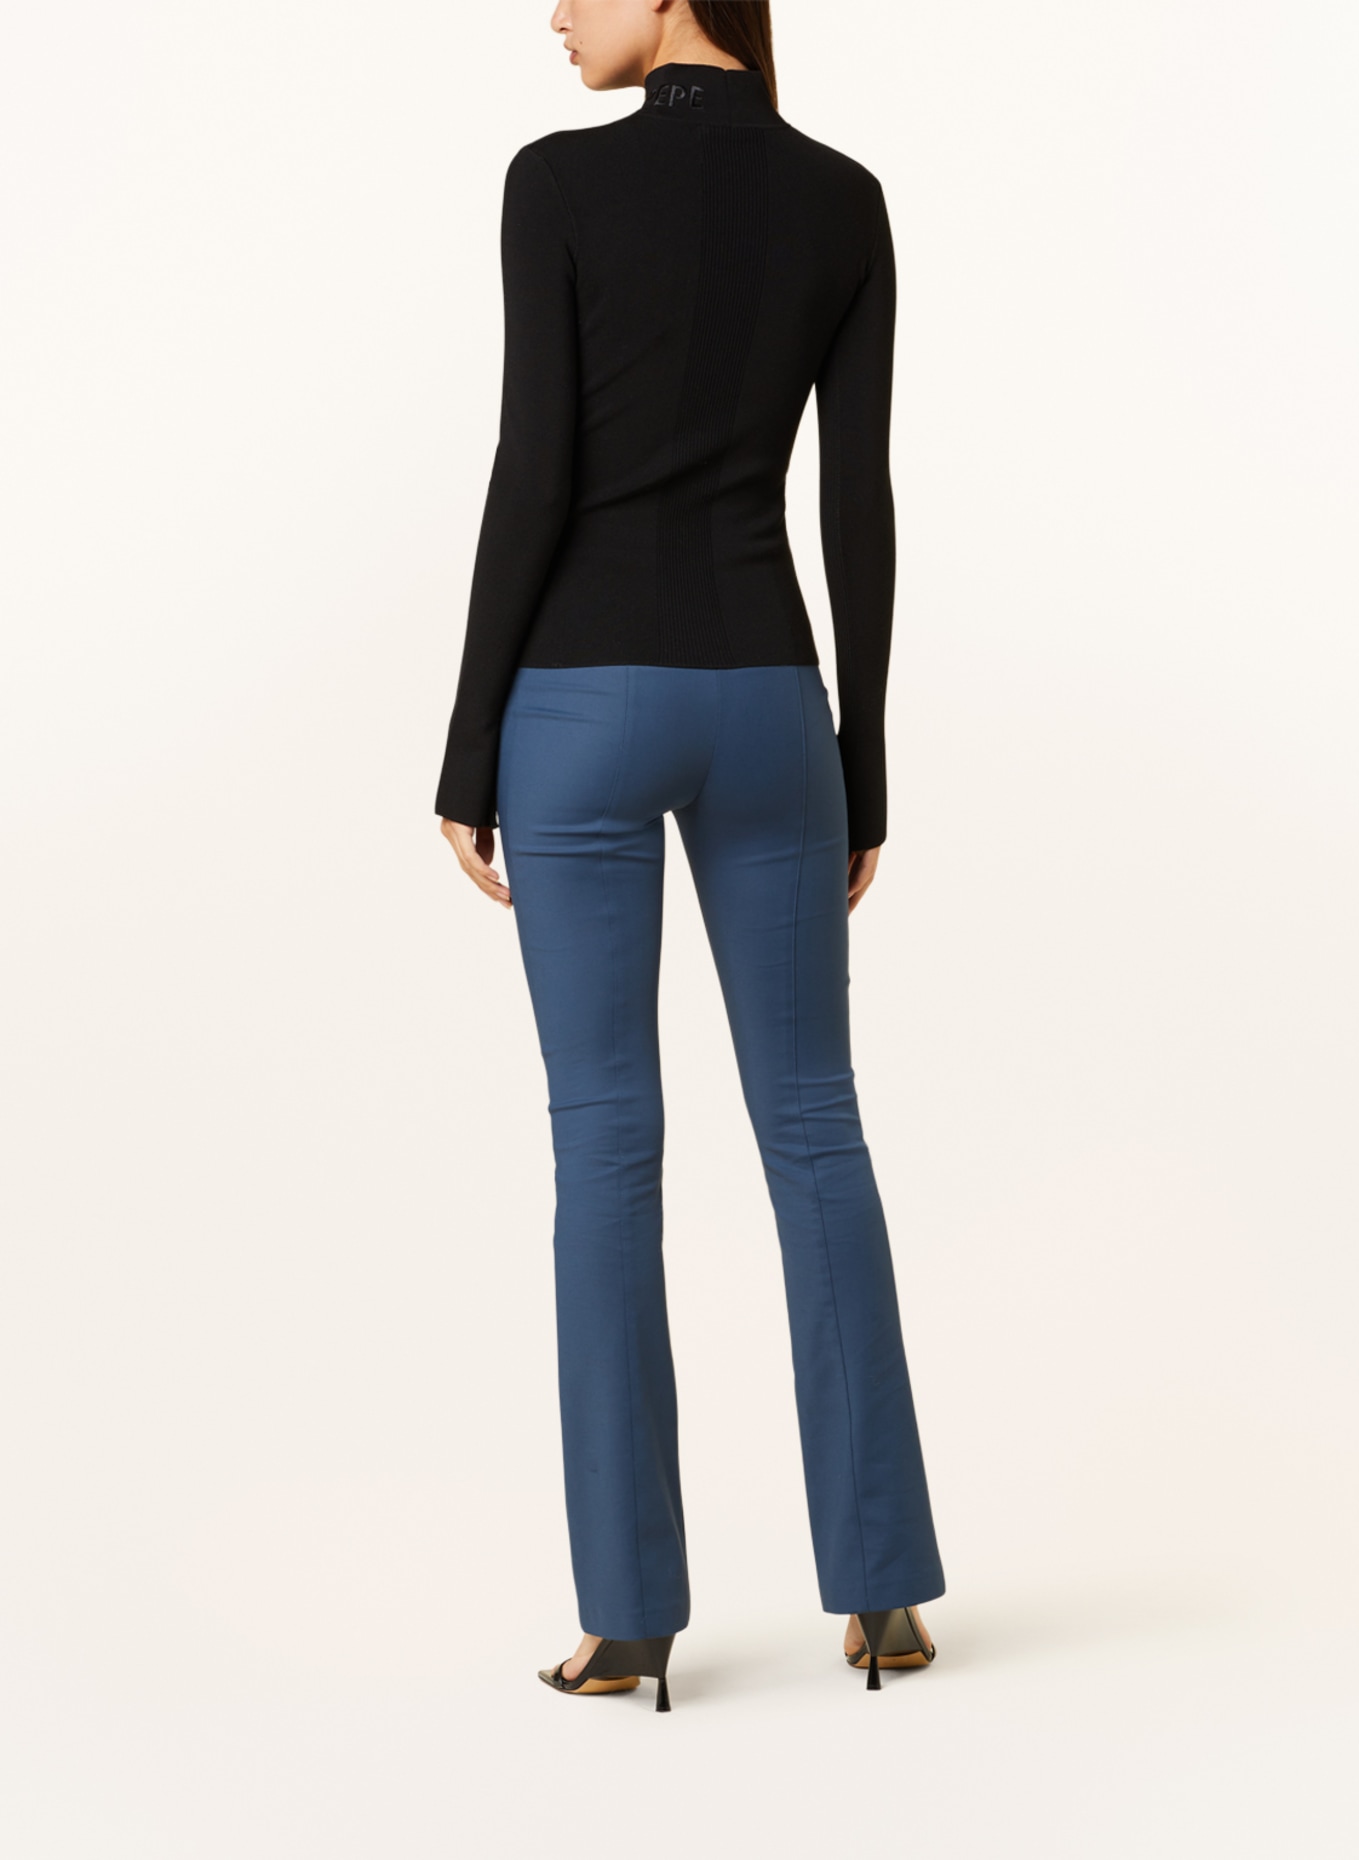 PATRIZIA PEPE Sweater, Color: BLACK (Image 3)